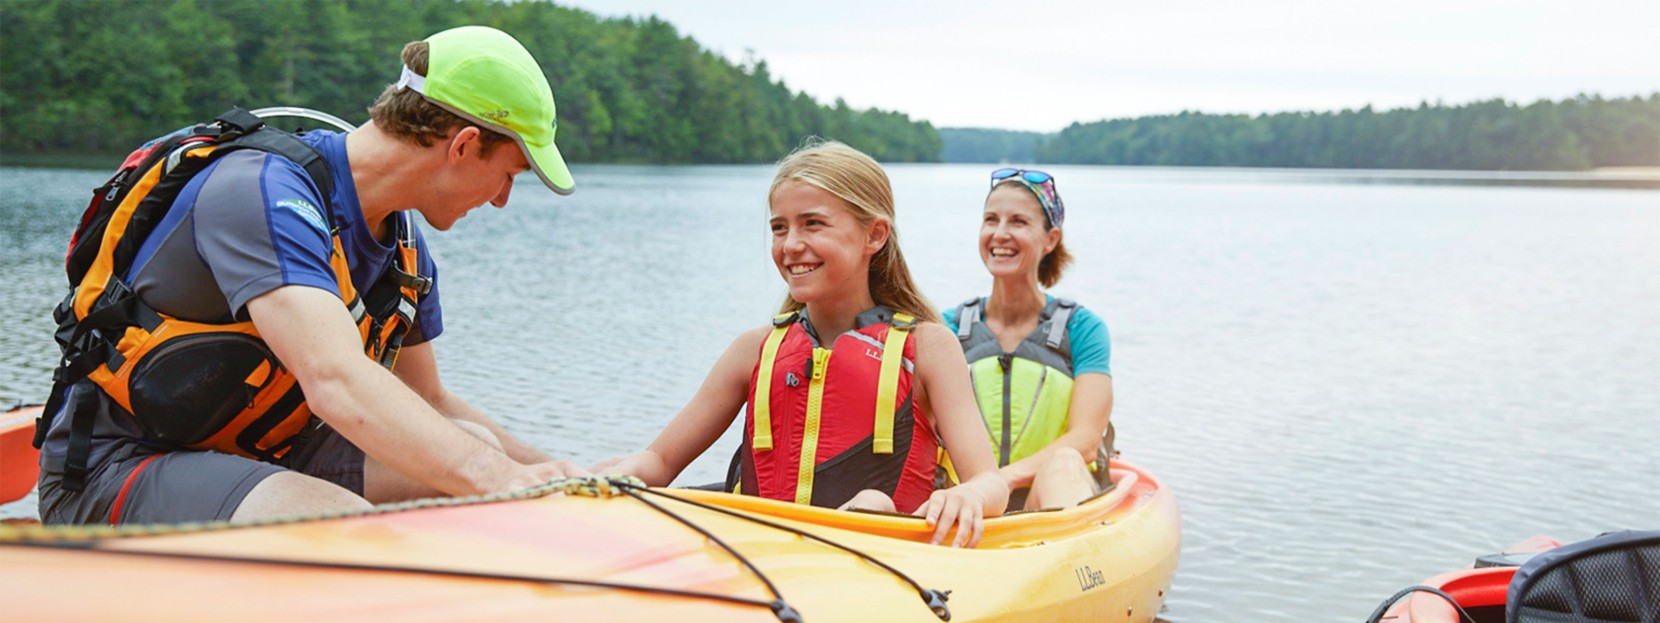 Kayak Paddle Holder - The #1 [*Safest*] Way to Hold Kayak Paddles